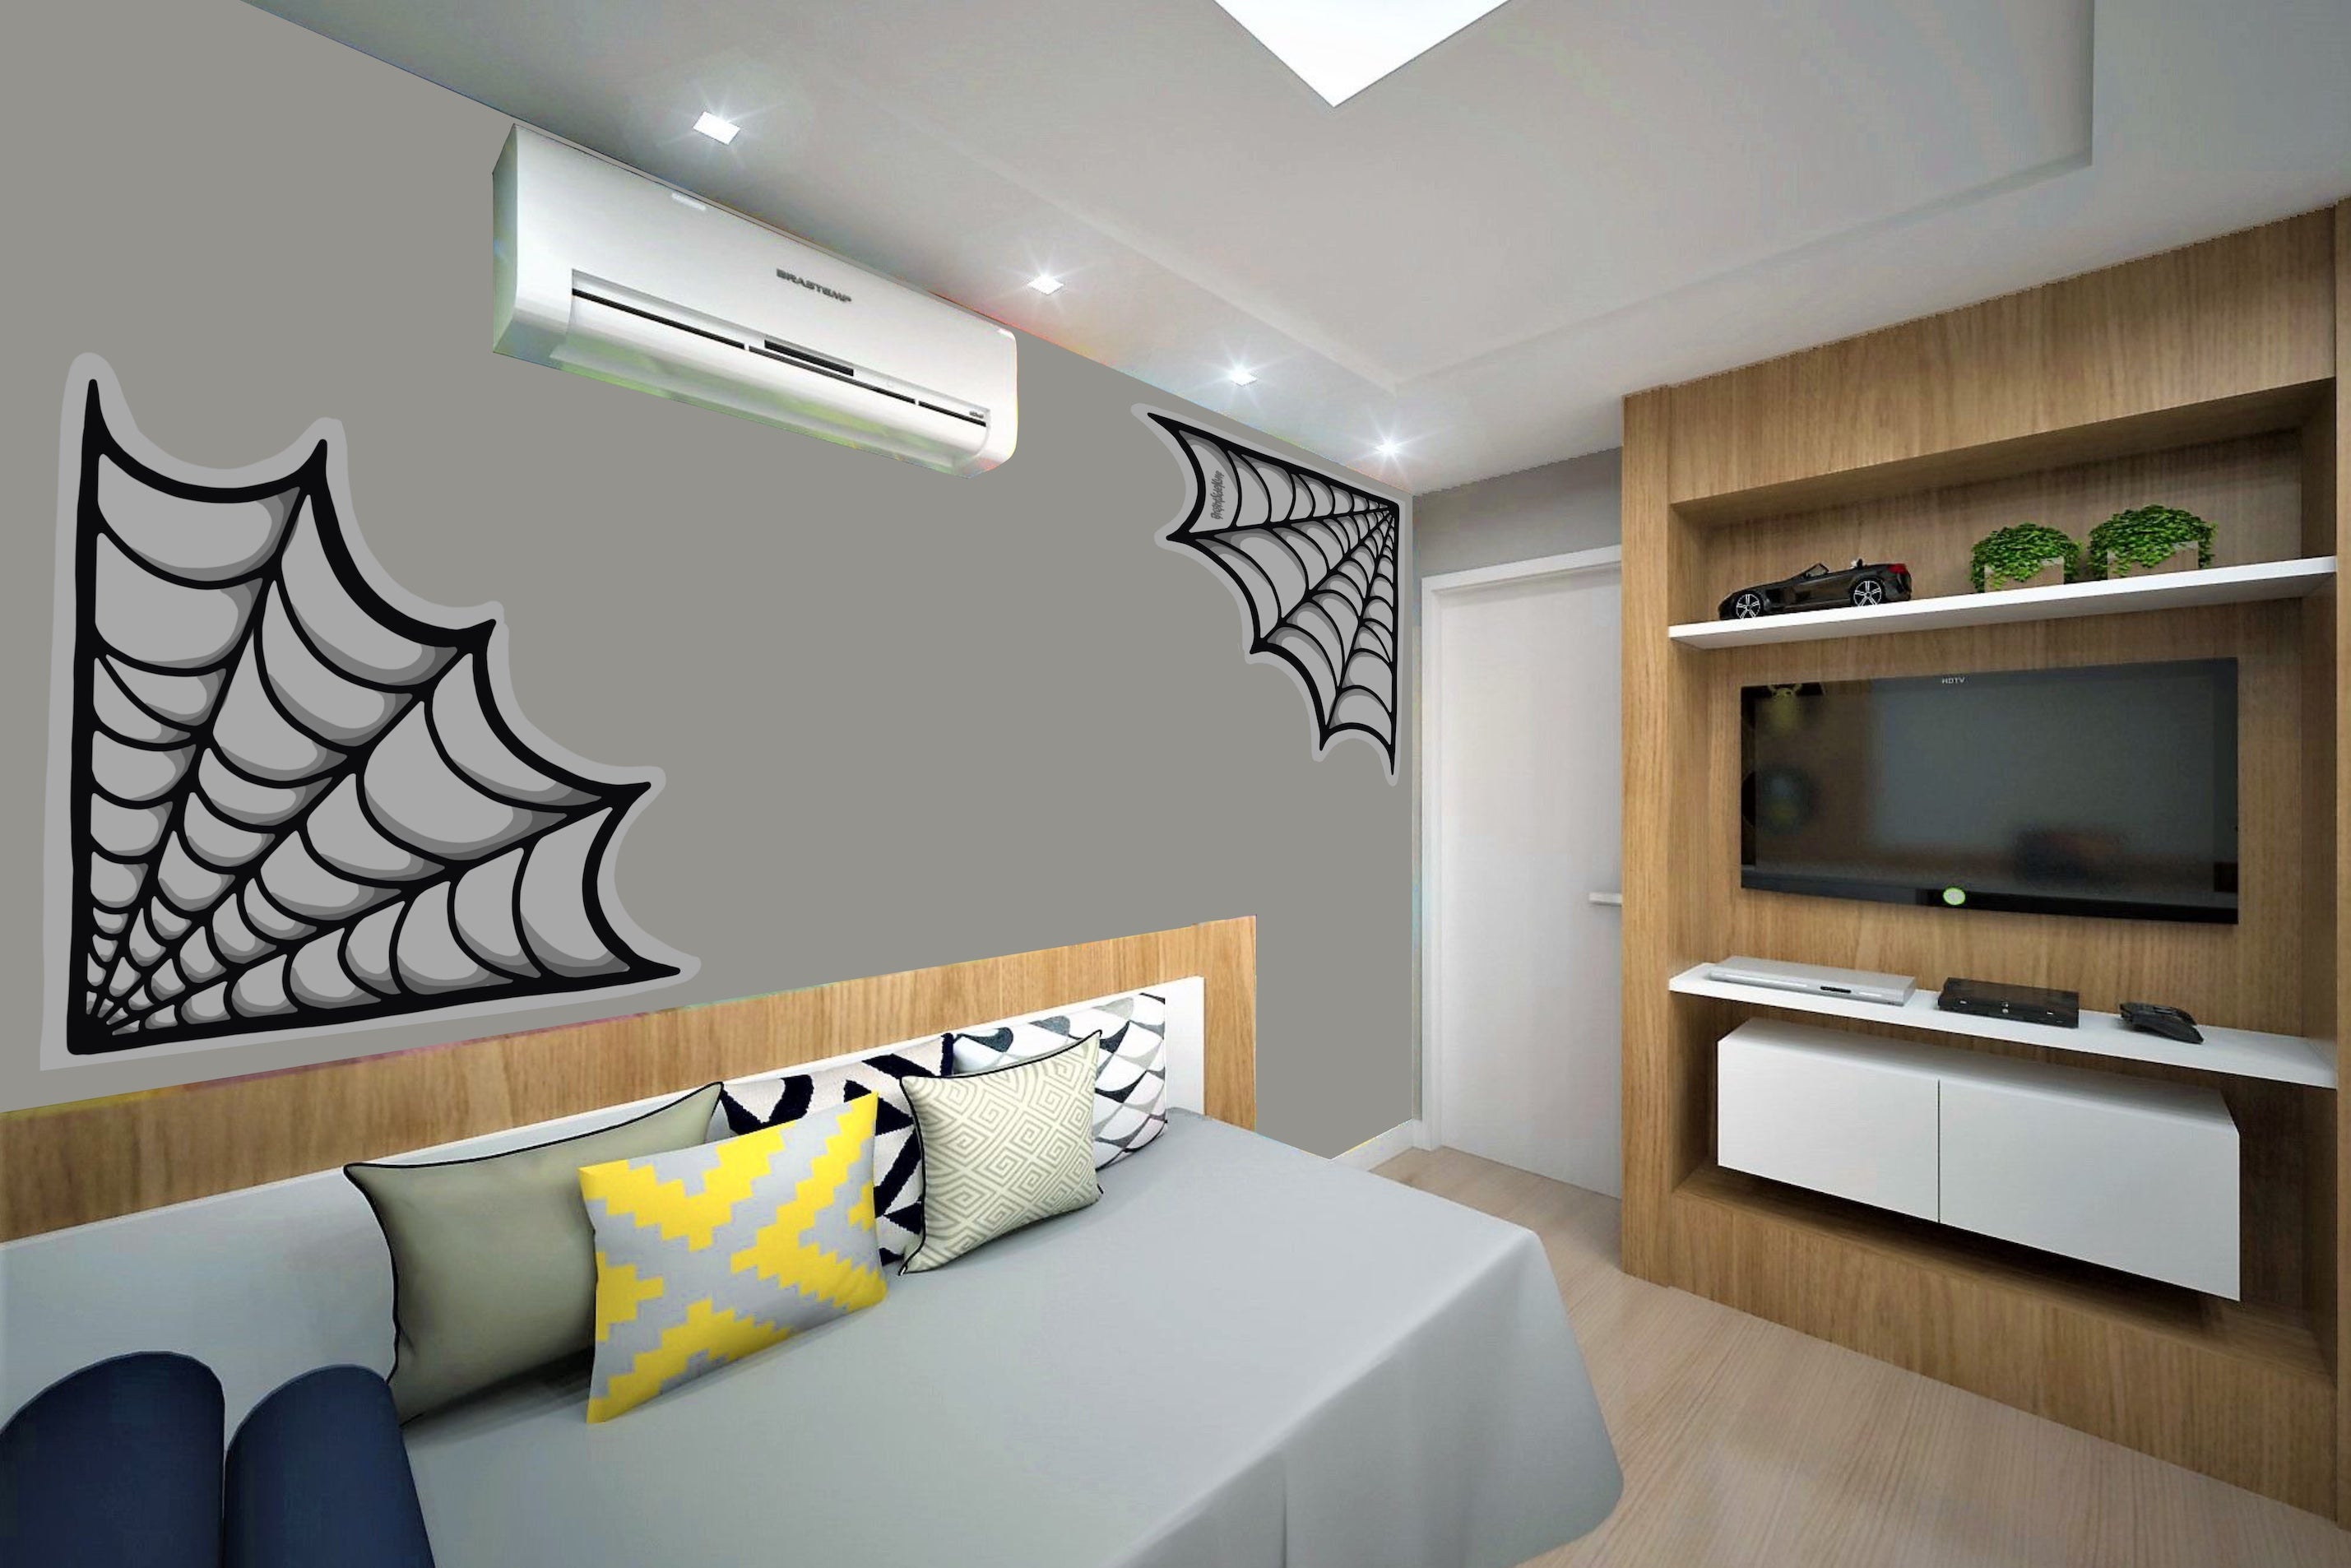 Wall Art Decal - Spider Web Set